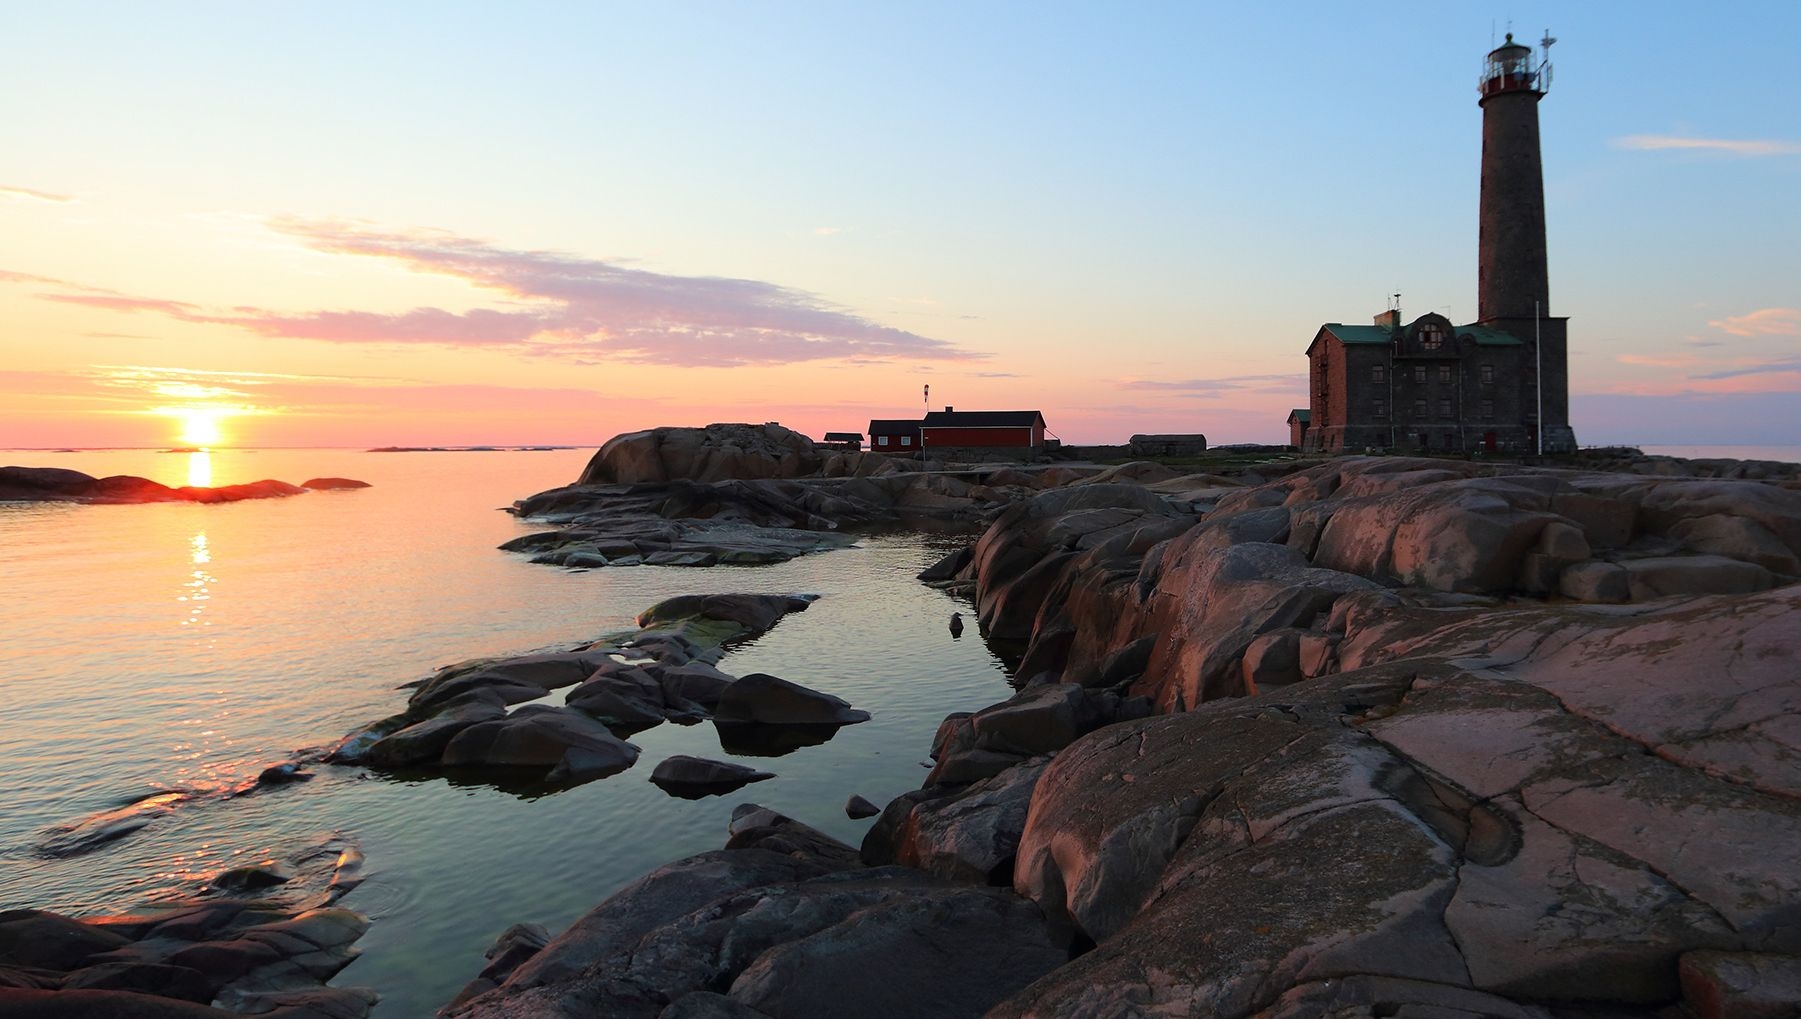 Bengtskär Lighthouse is bathed in light at sunset.